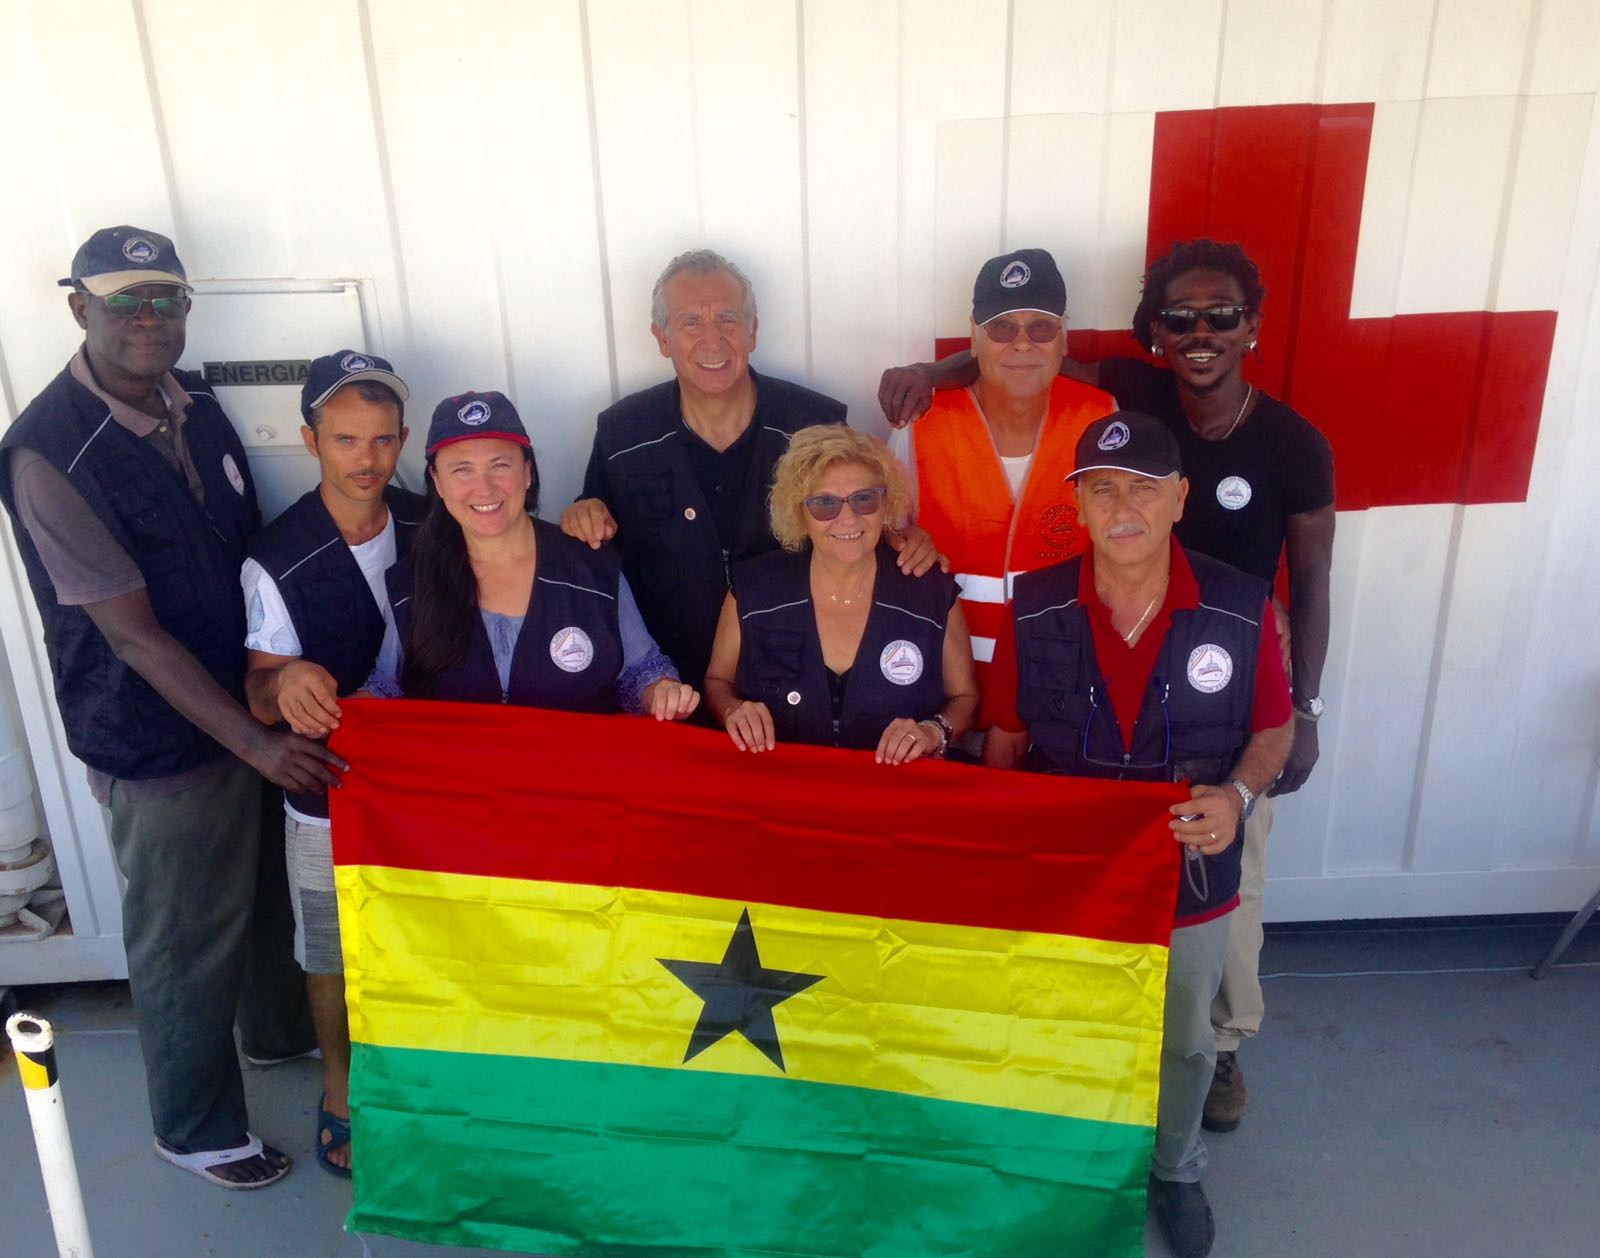 gruppo con bandiera del ghana